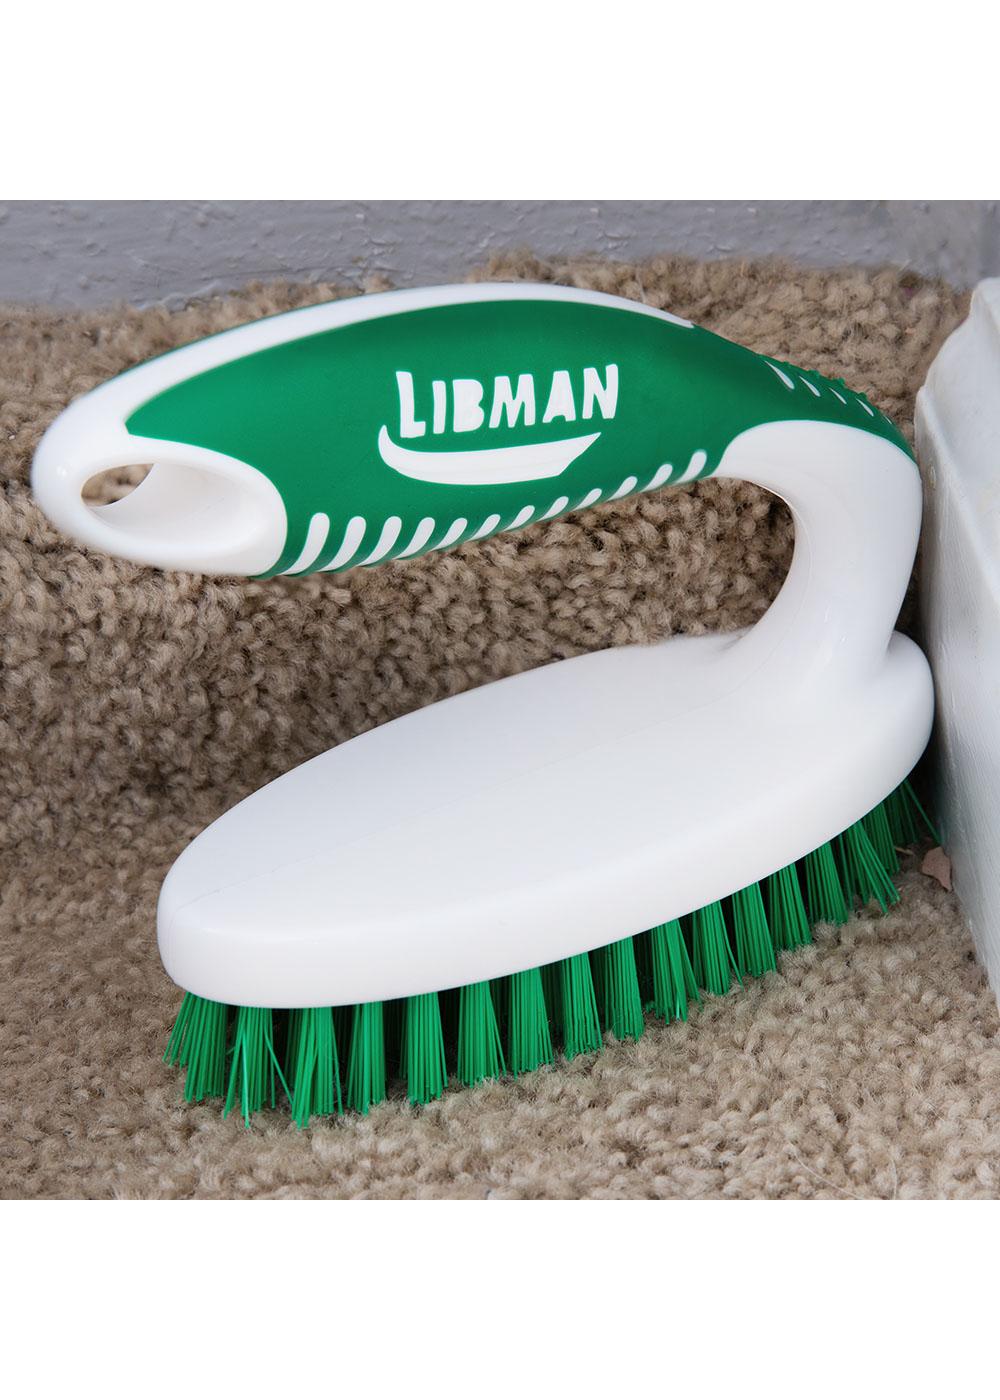 Libman Long Handled Utility Brush